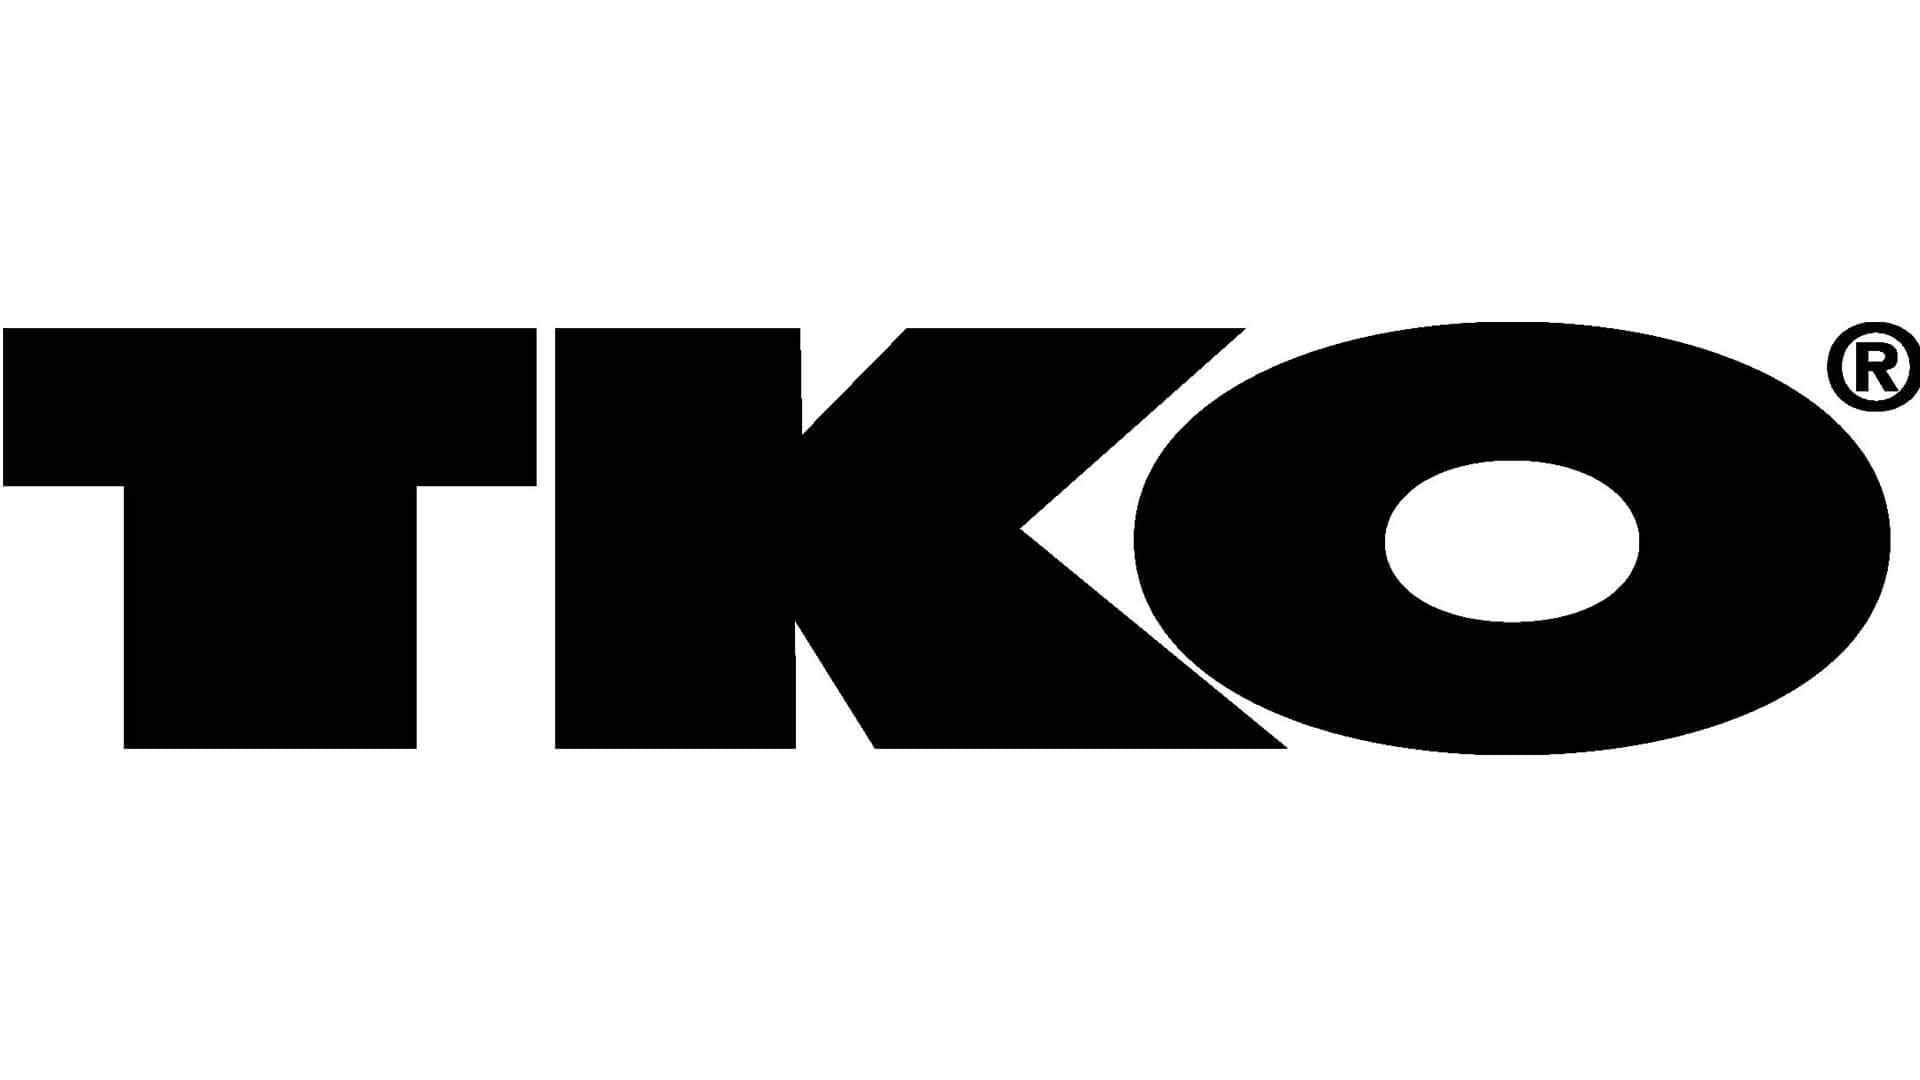 A black and white logo of the tkc company.